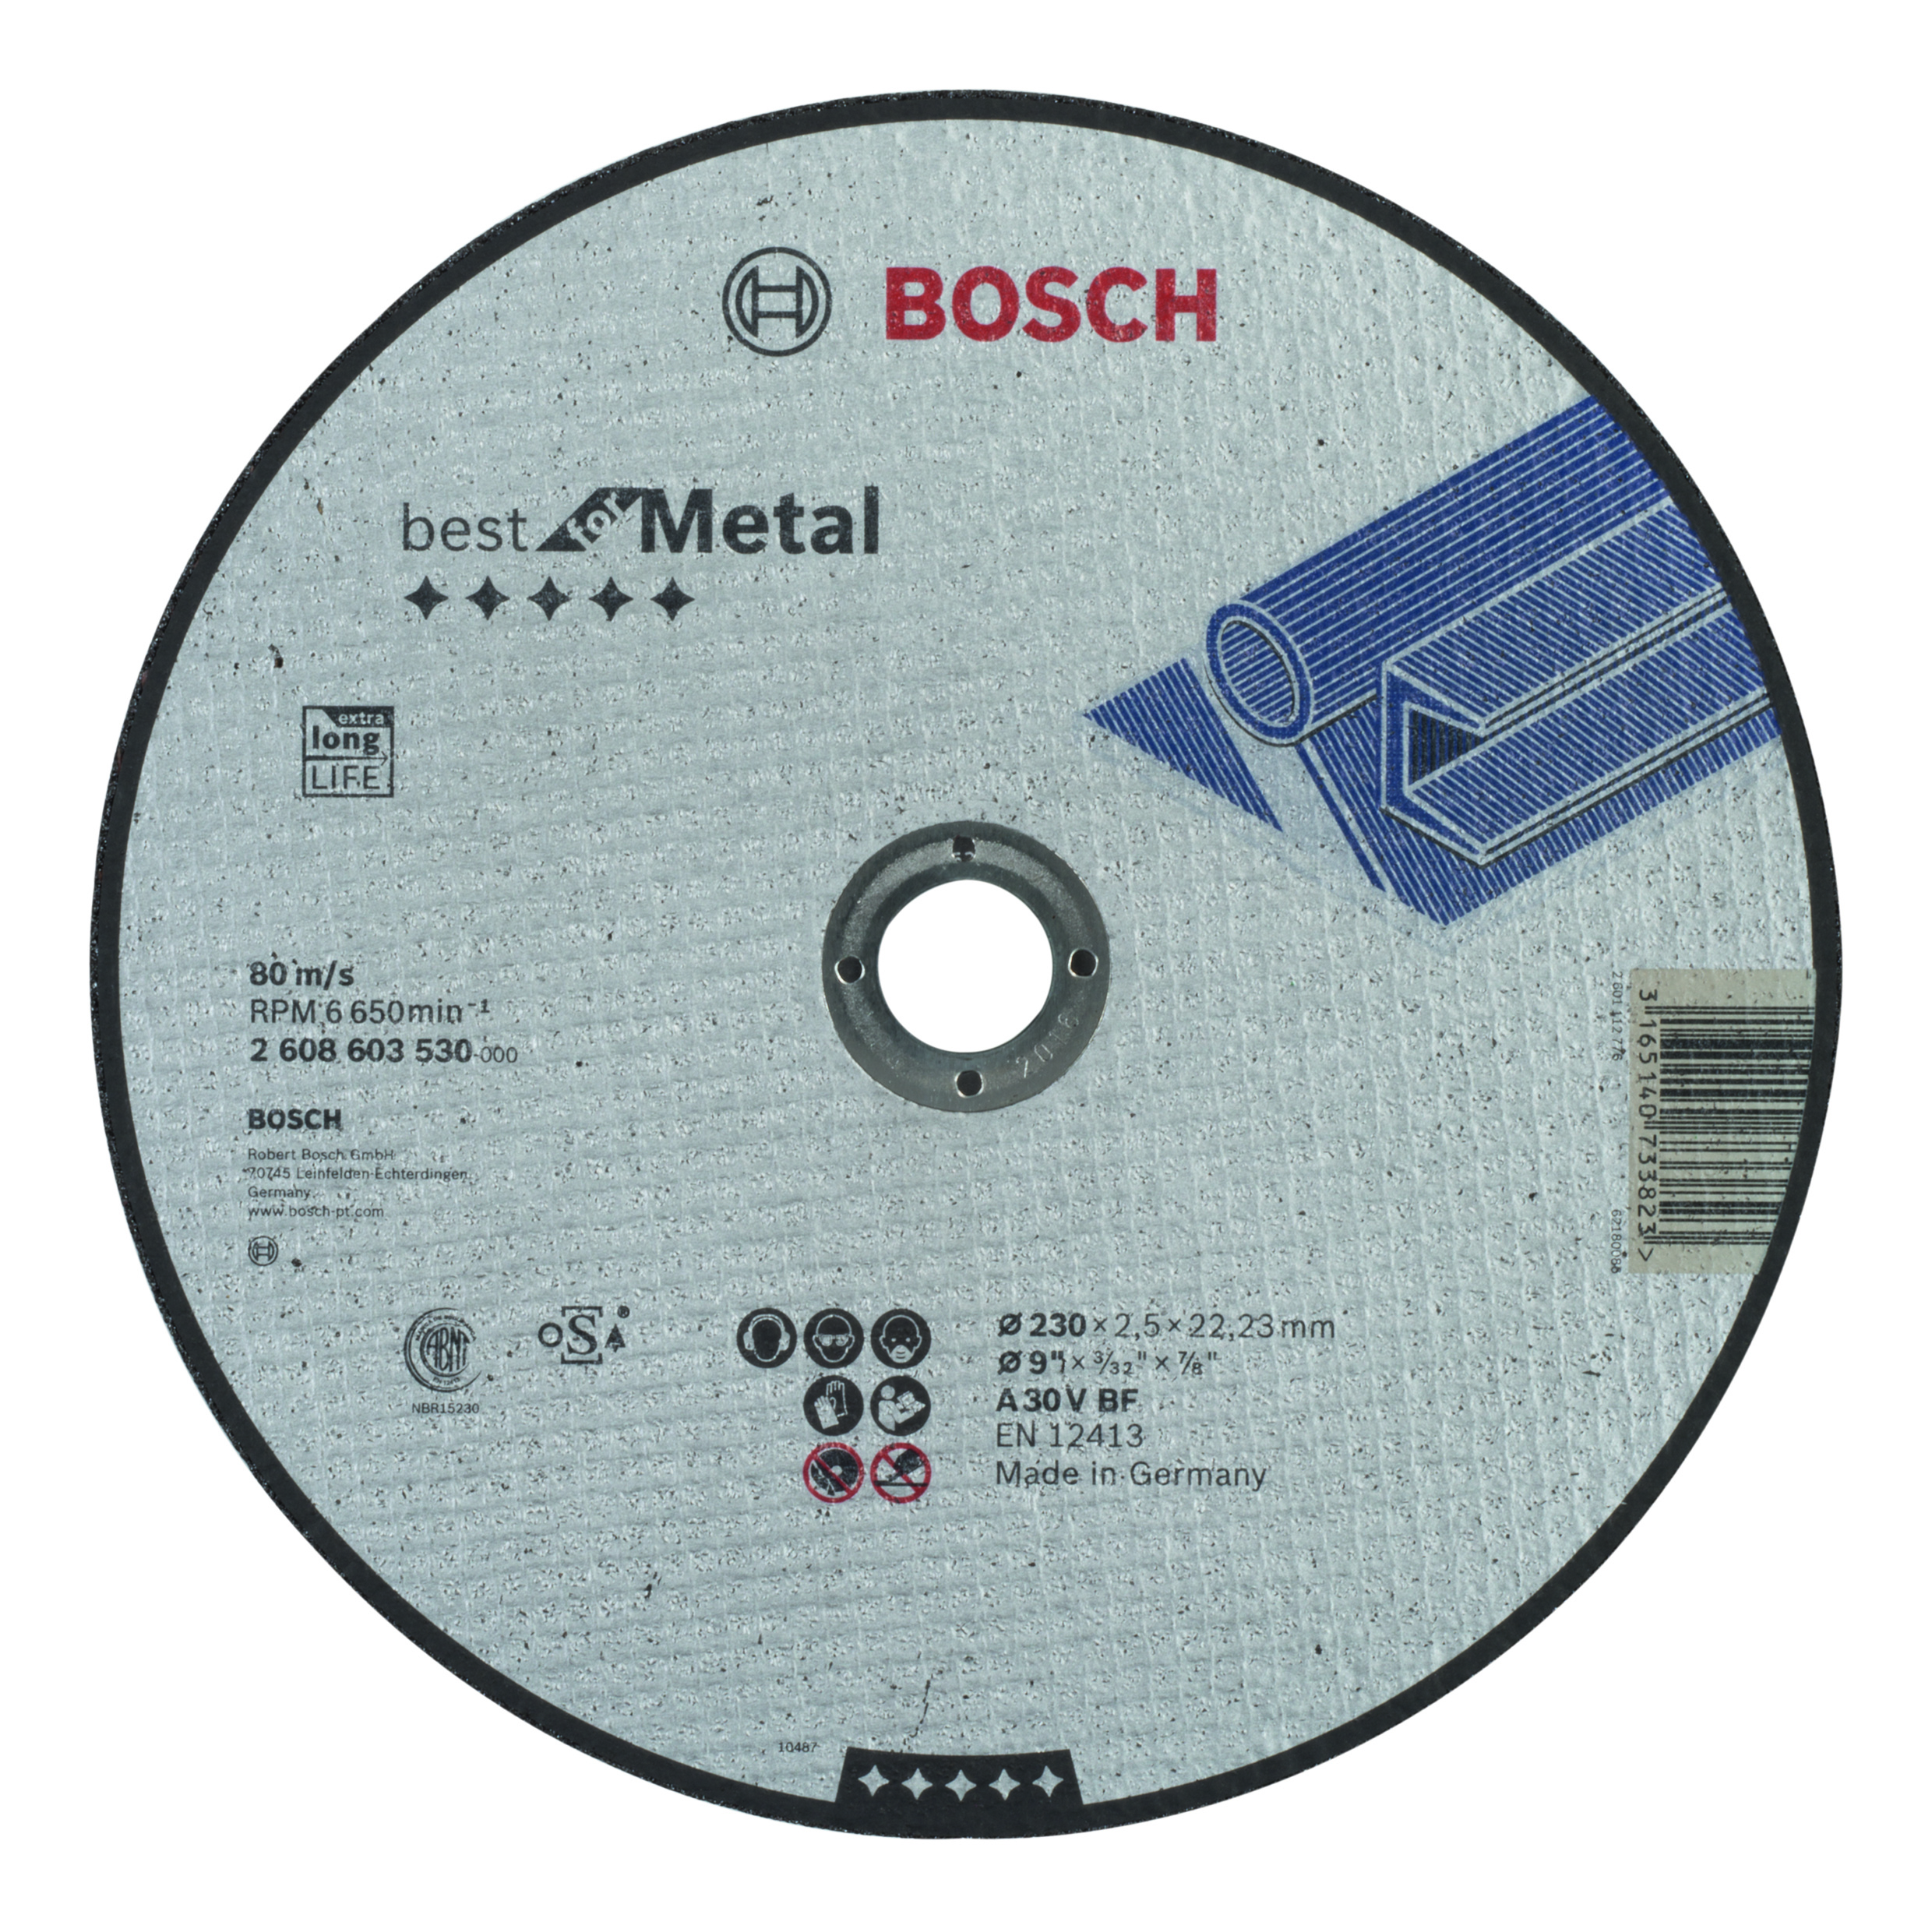 mm 30 V A for Bosch Metal 230 mm, BF, 2,5 gerade Trennscheibe Best